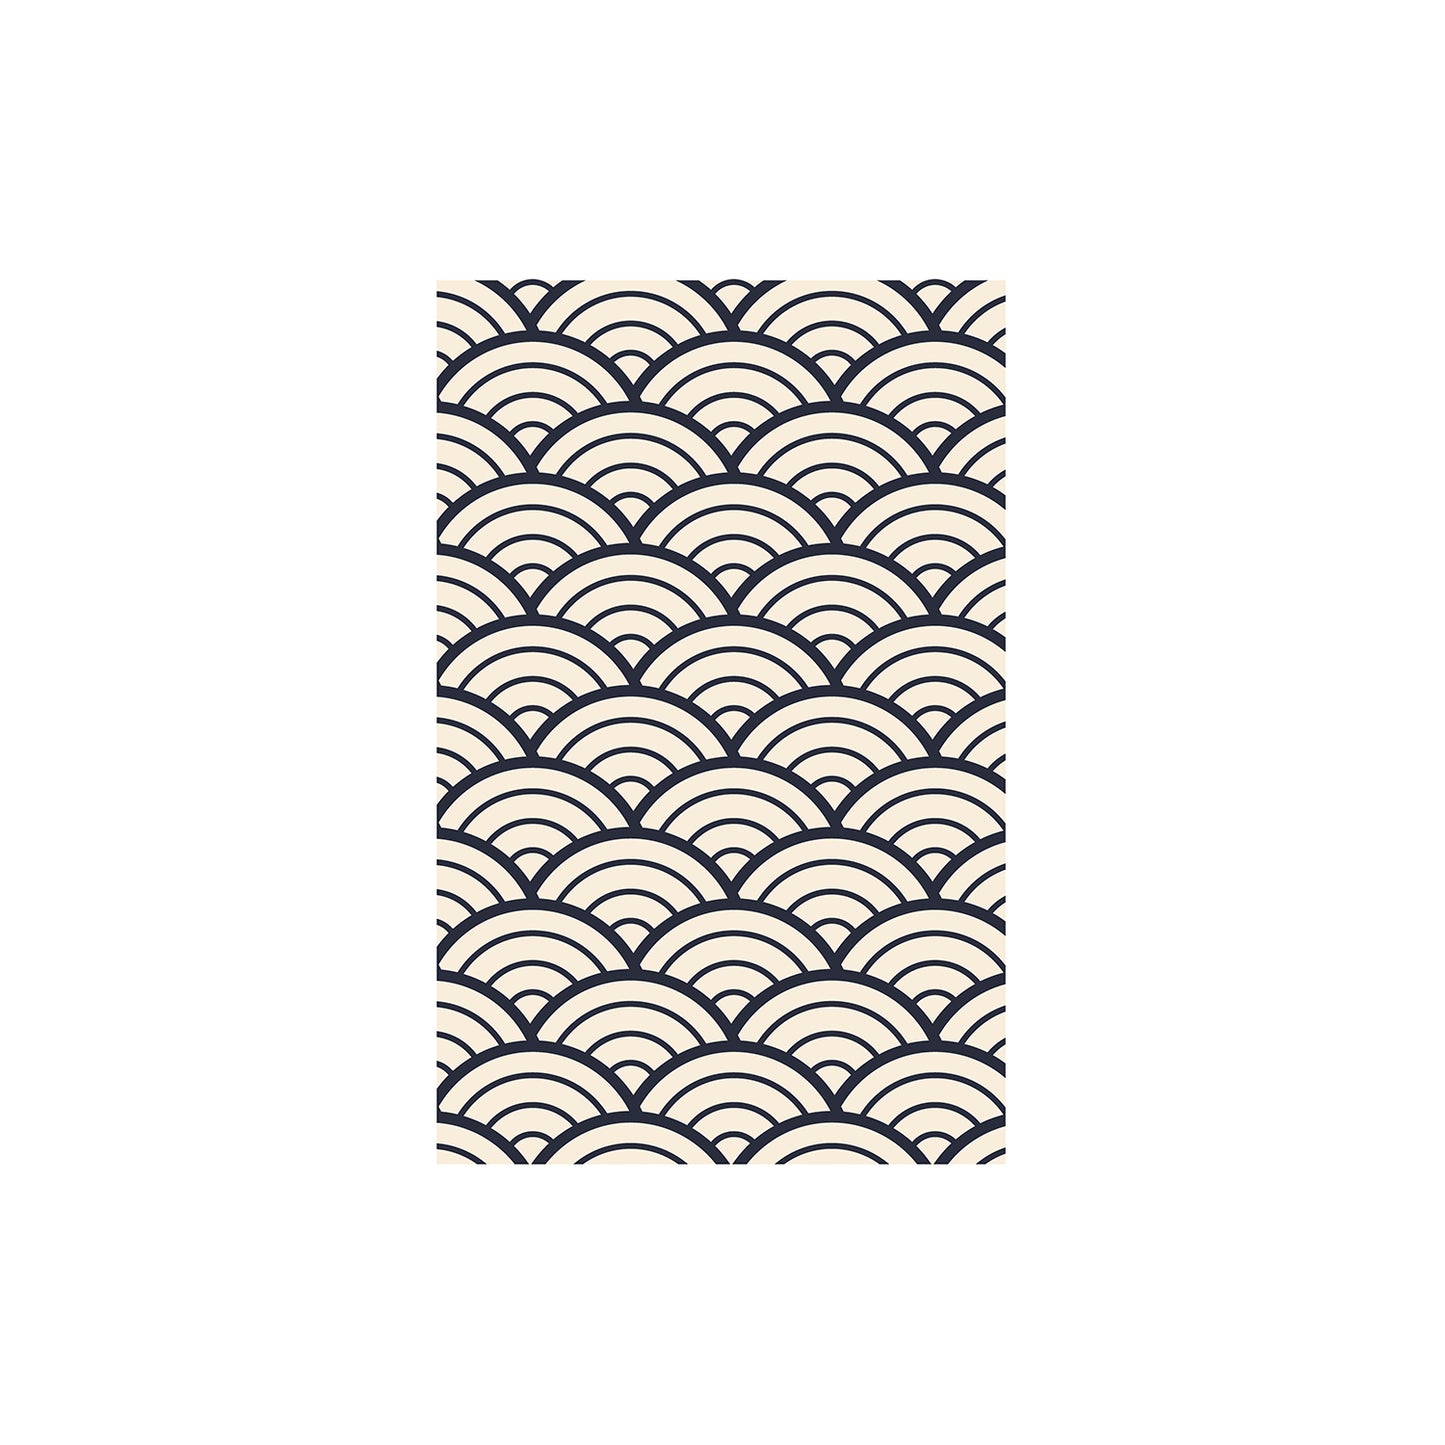 Shunkoen Mamimu Japanese Classic Motifs Mini Memo Notebook | Six Designs Monochrome Waves